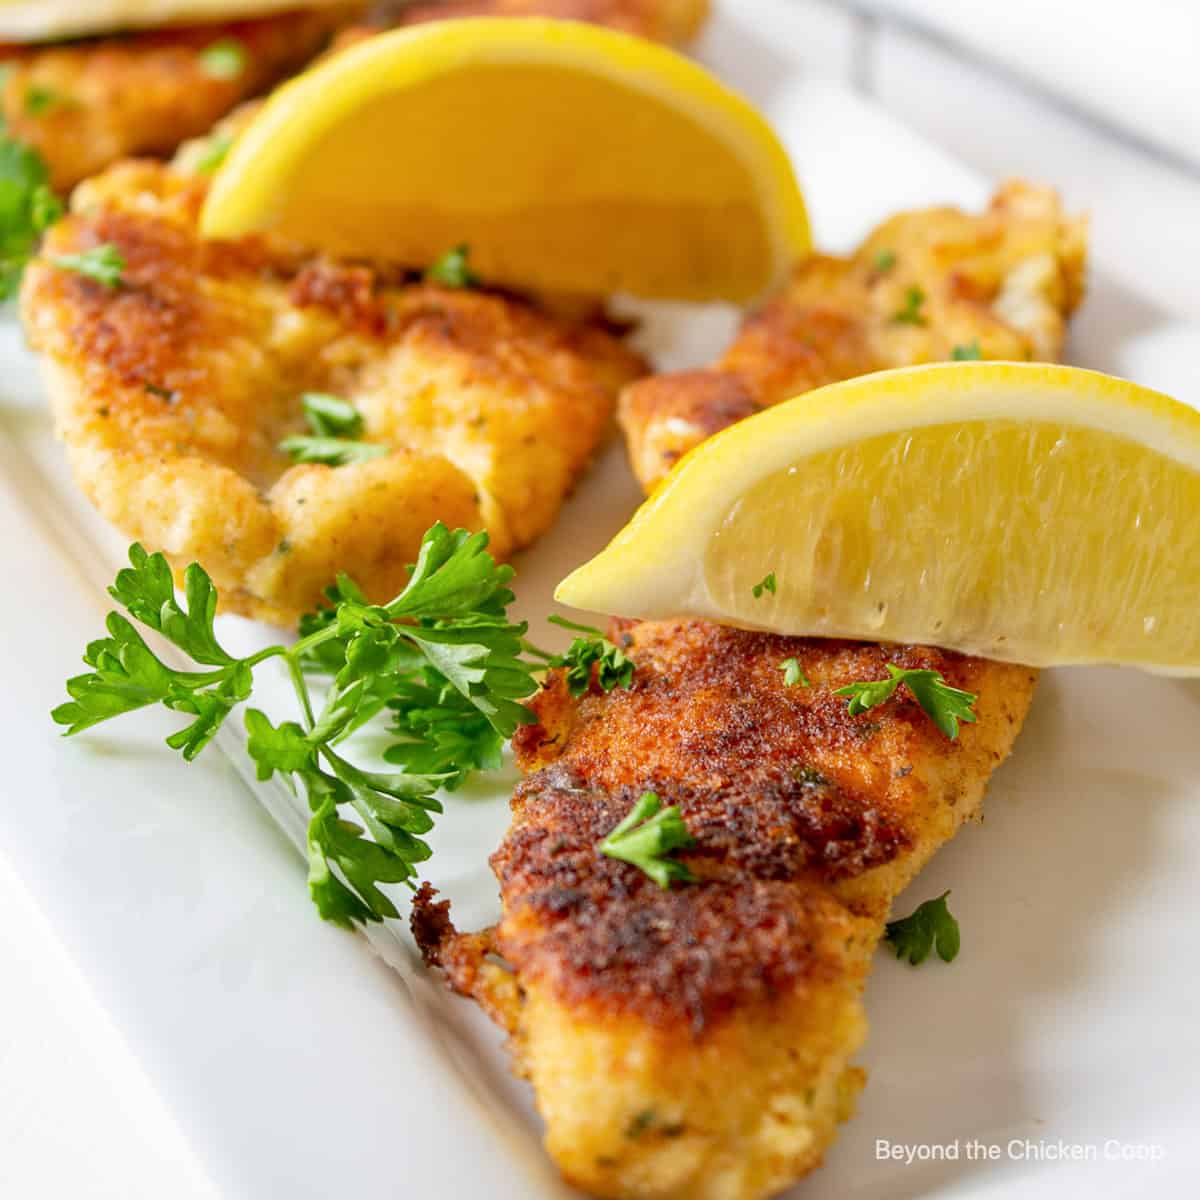 Crispy fish fillets topped with lemon wedges.